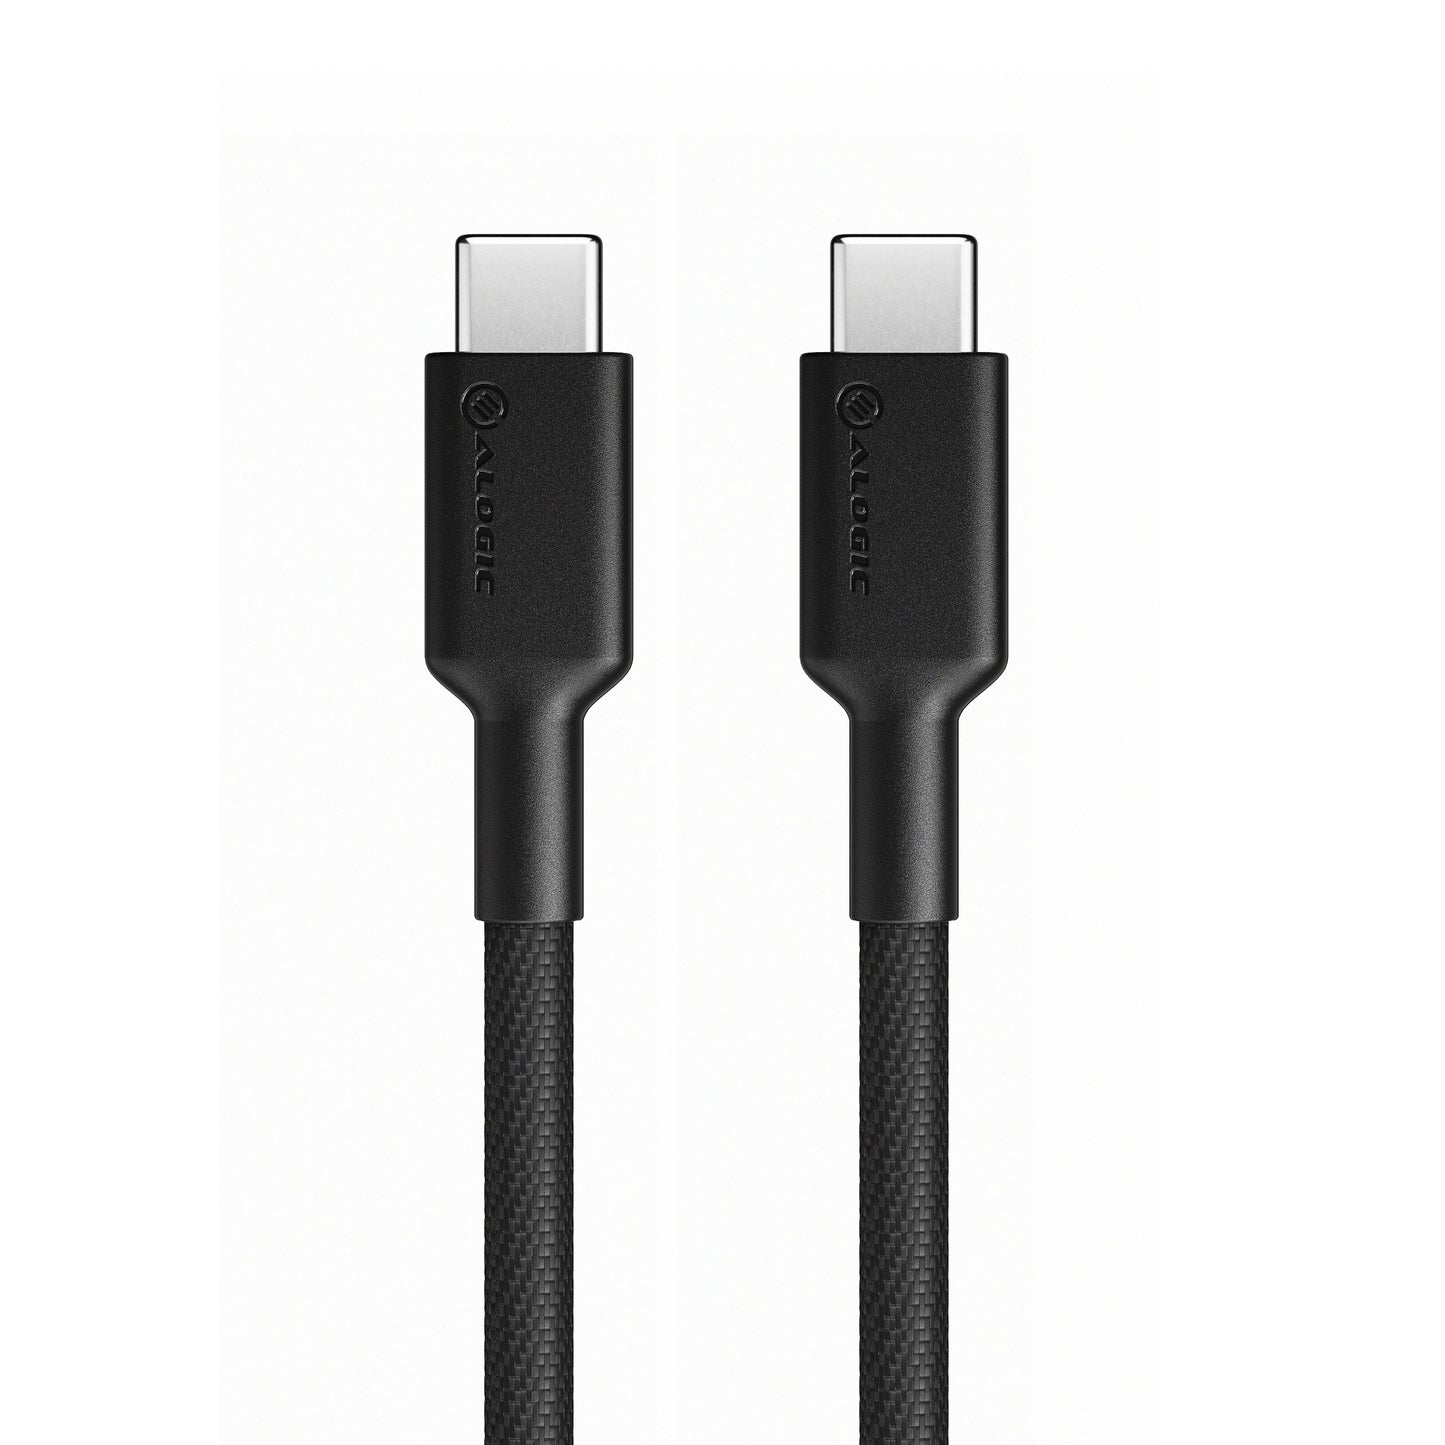 ALOGIC Elements Pro USB 2.0 USB-C to USB-C Cable 5A/ 480Mbps - Black